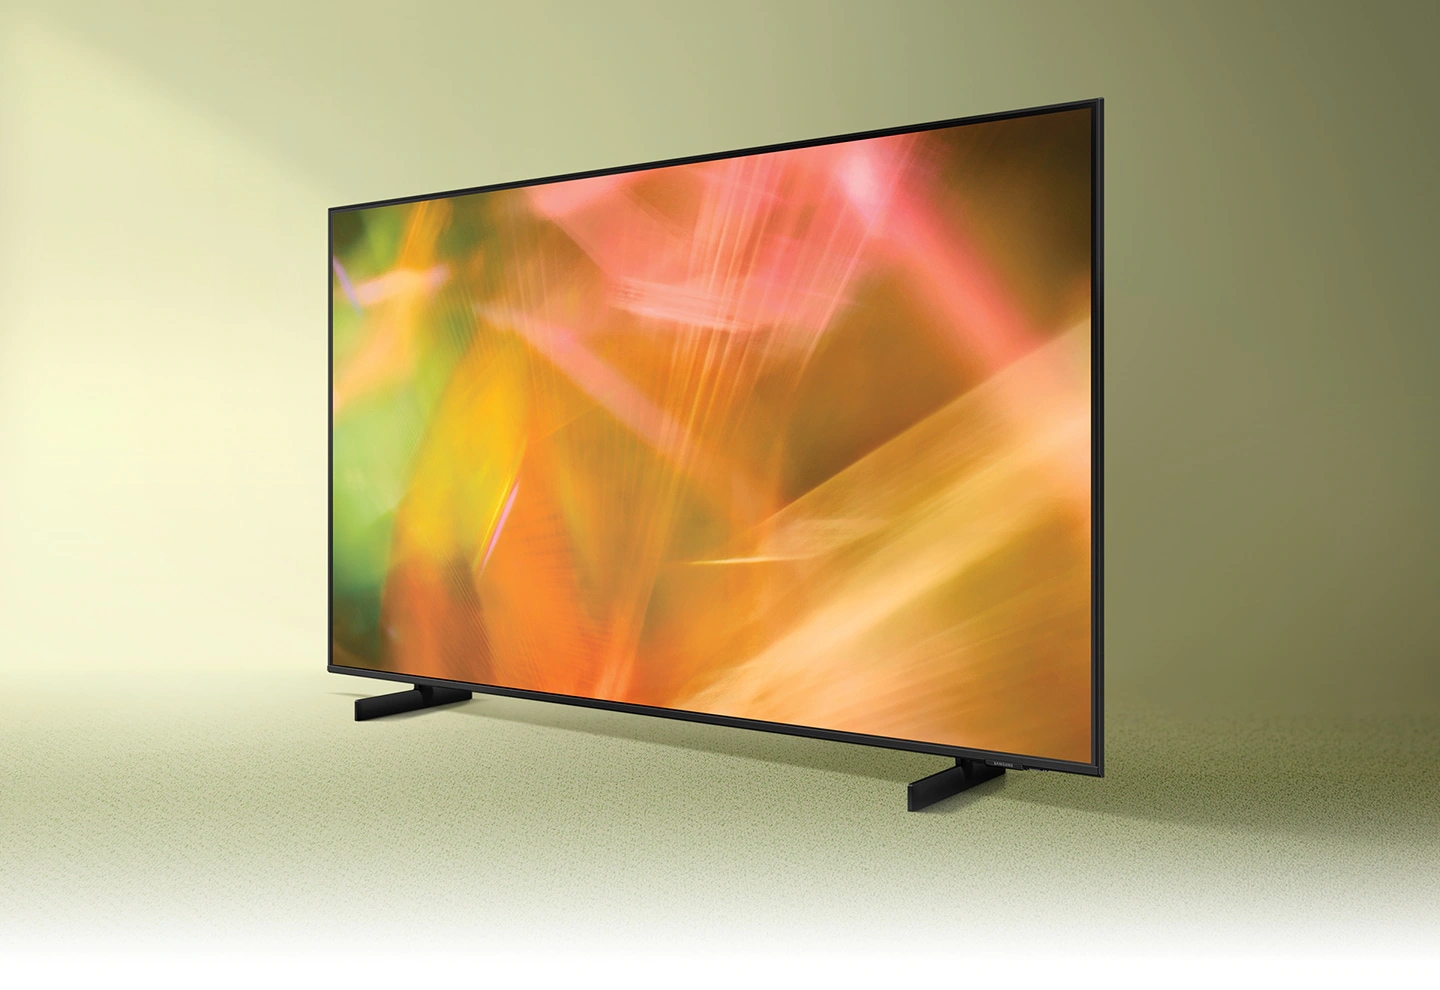 Televisor Samsung Smart TV 75 pulgadas Crystal UHD BU8000